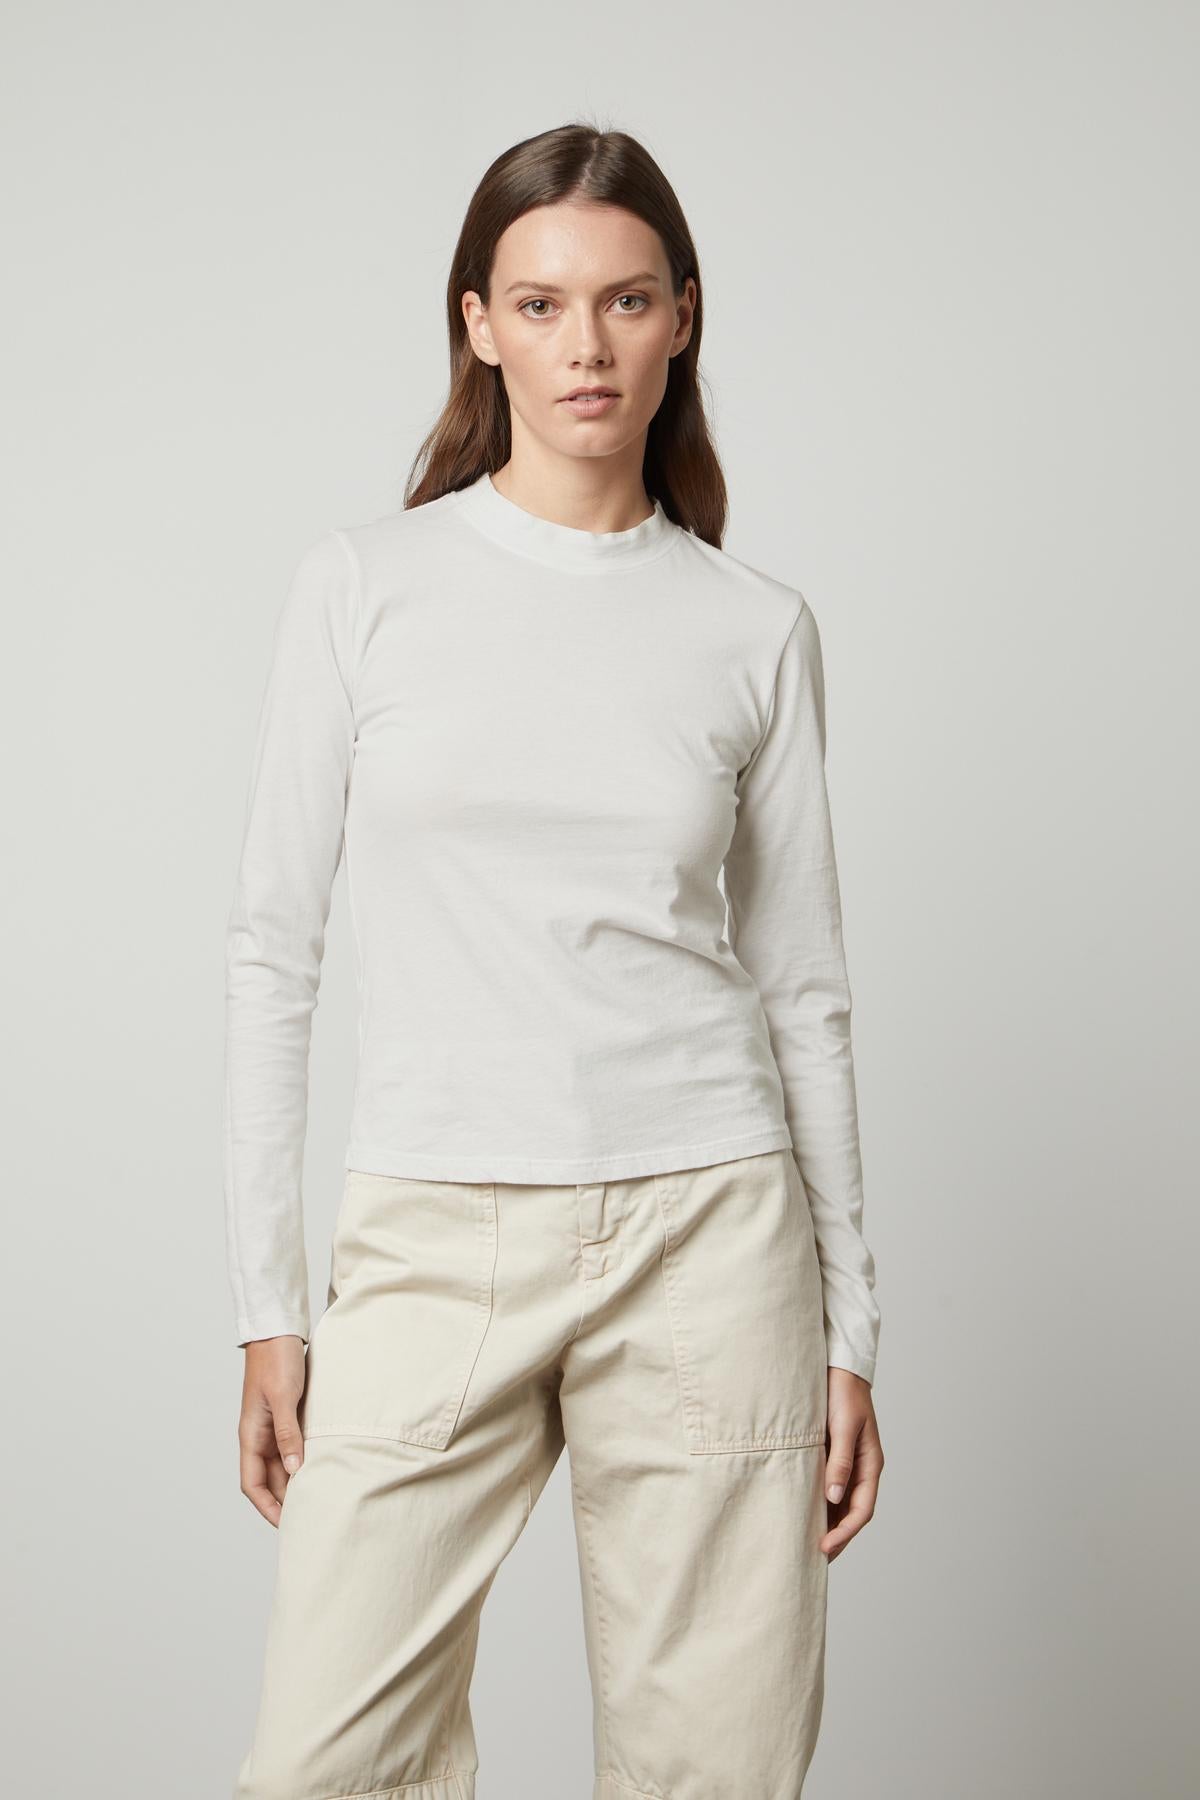 The model is wearing a white LINNY MOCK NECK TEE by Velvet by Graham & Spencer.-35660506628289